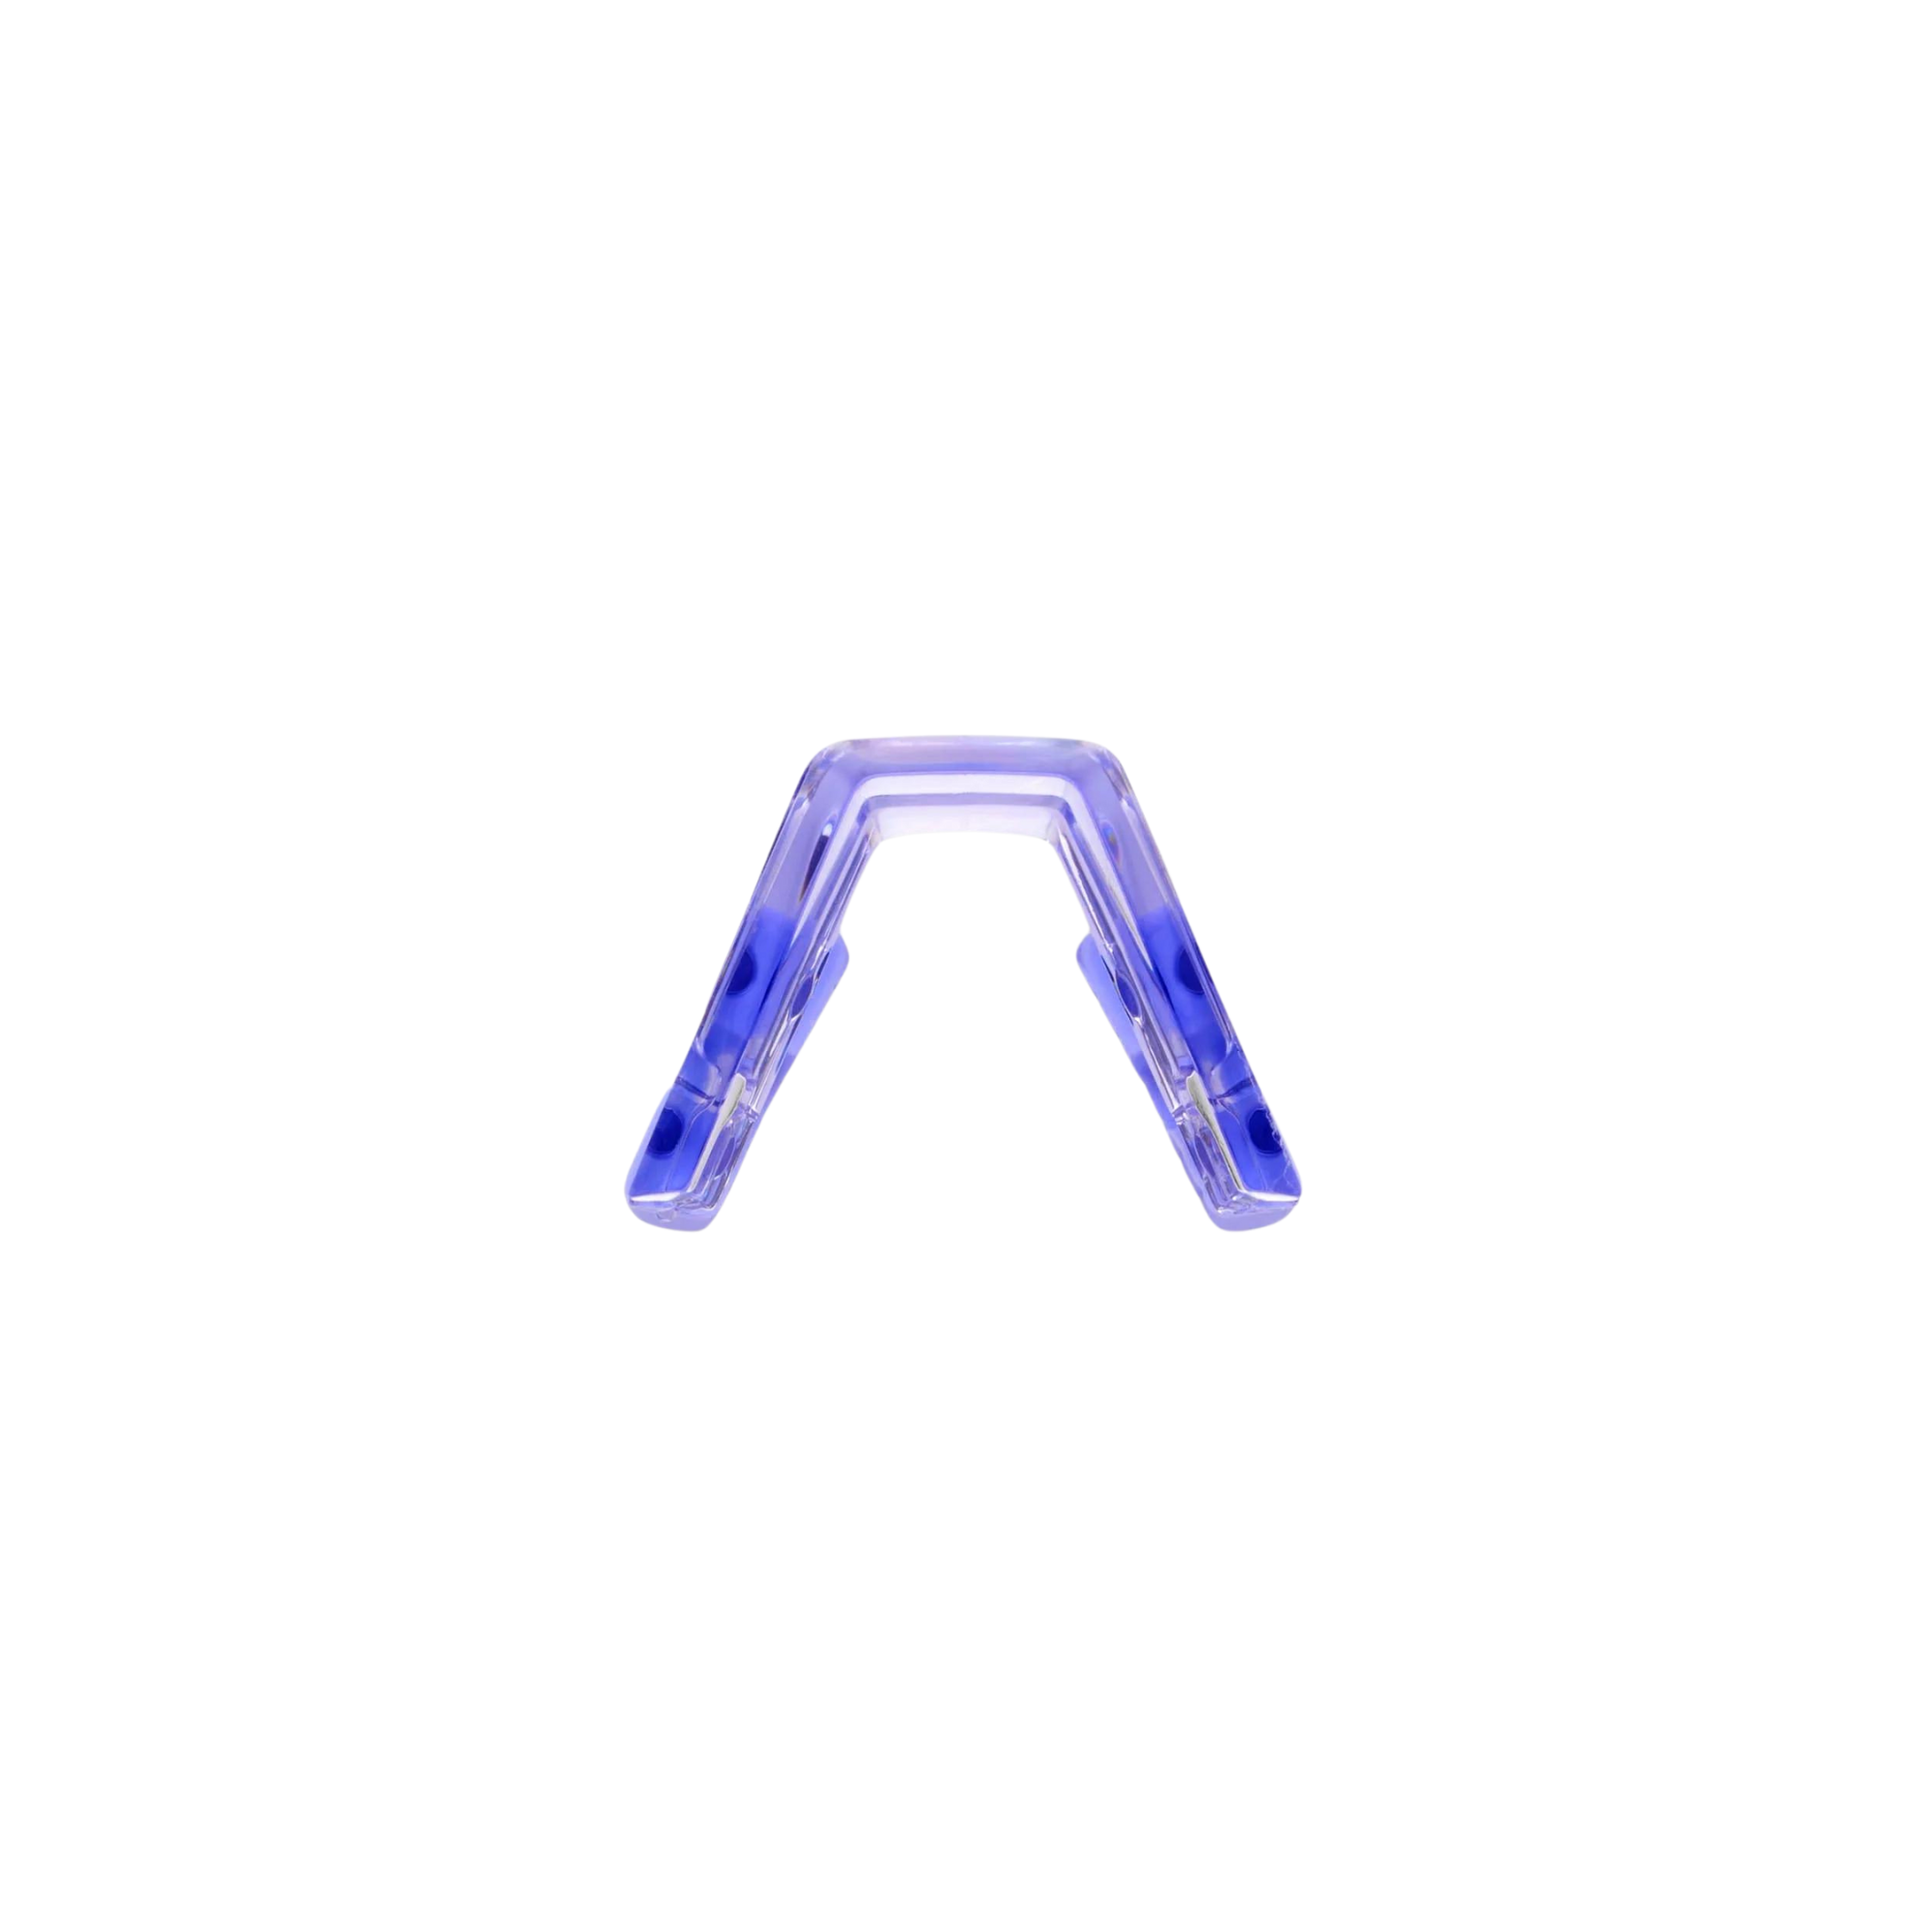 100% SPEEDCRAFT XS Nose Bridge Kit - Short - Polished Translucent Lavender